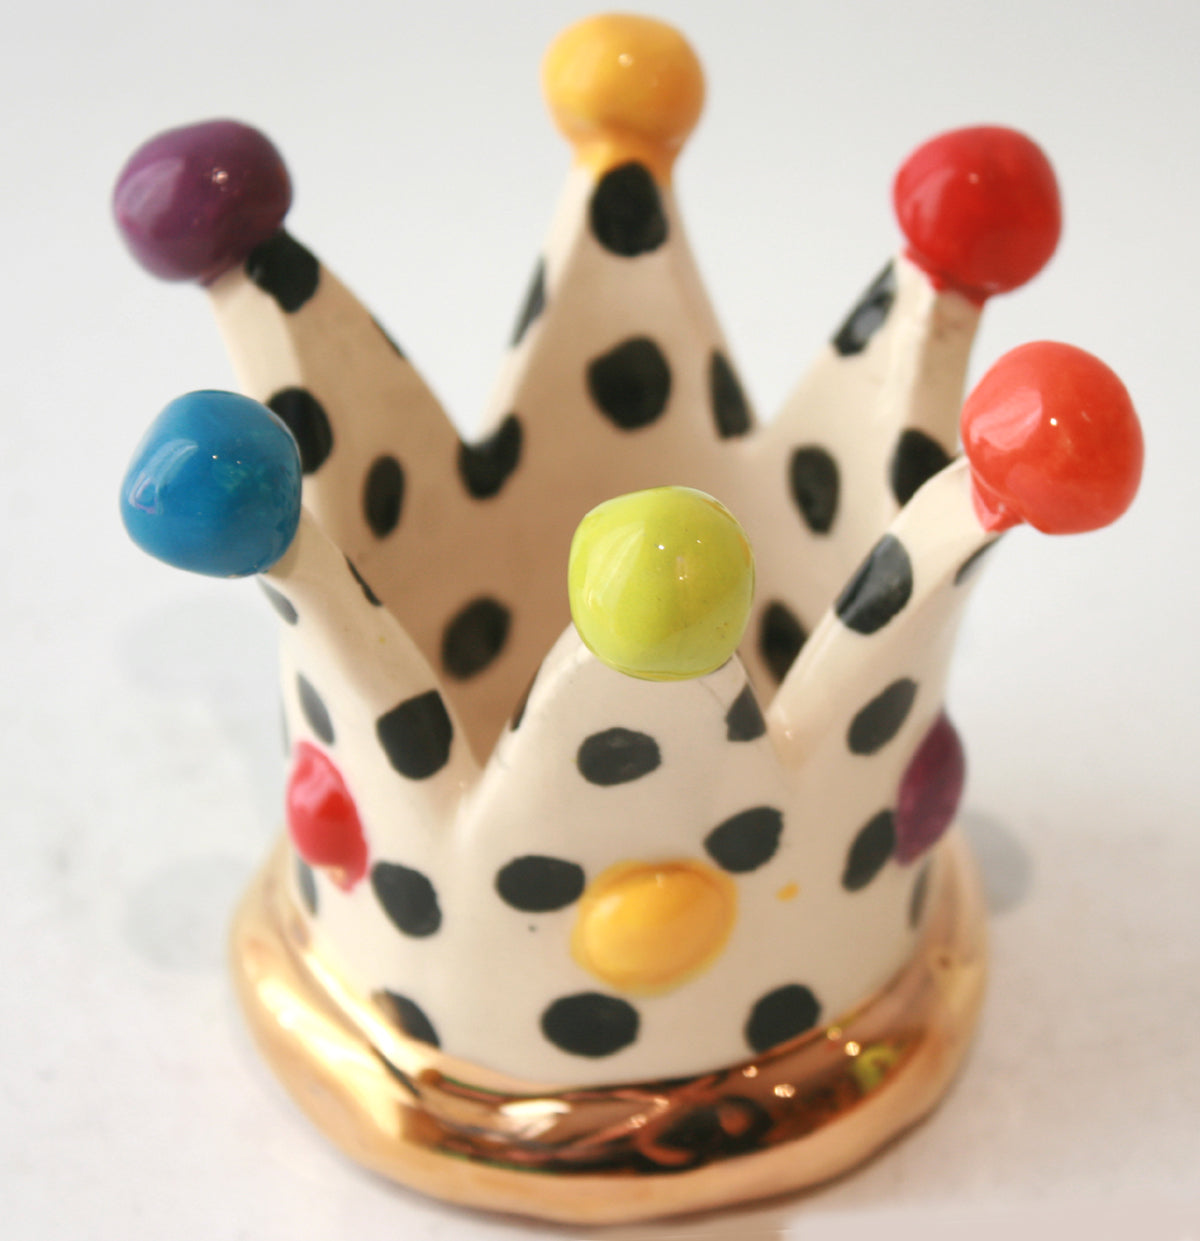 Crown Candleholder in Polka Dot